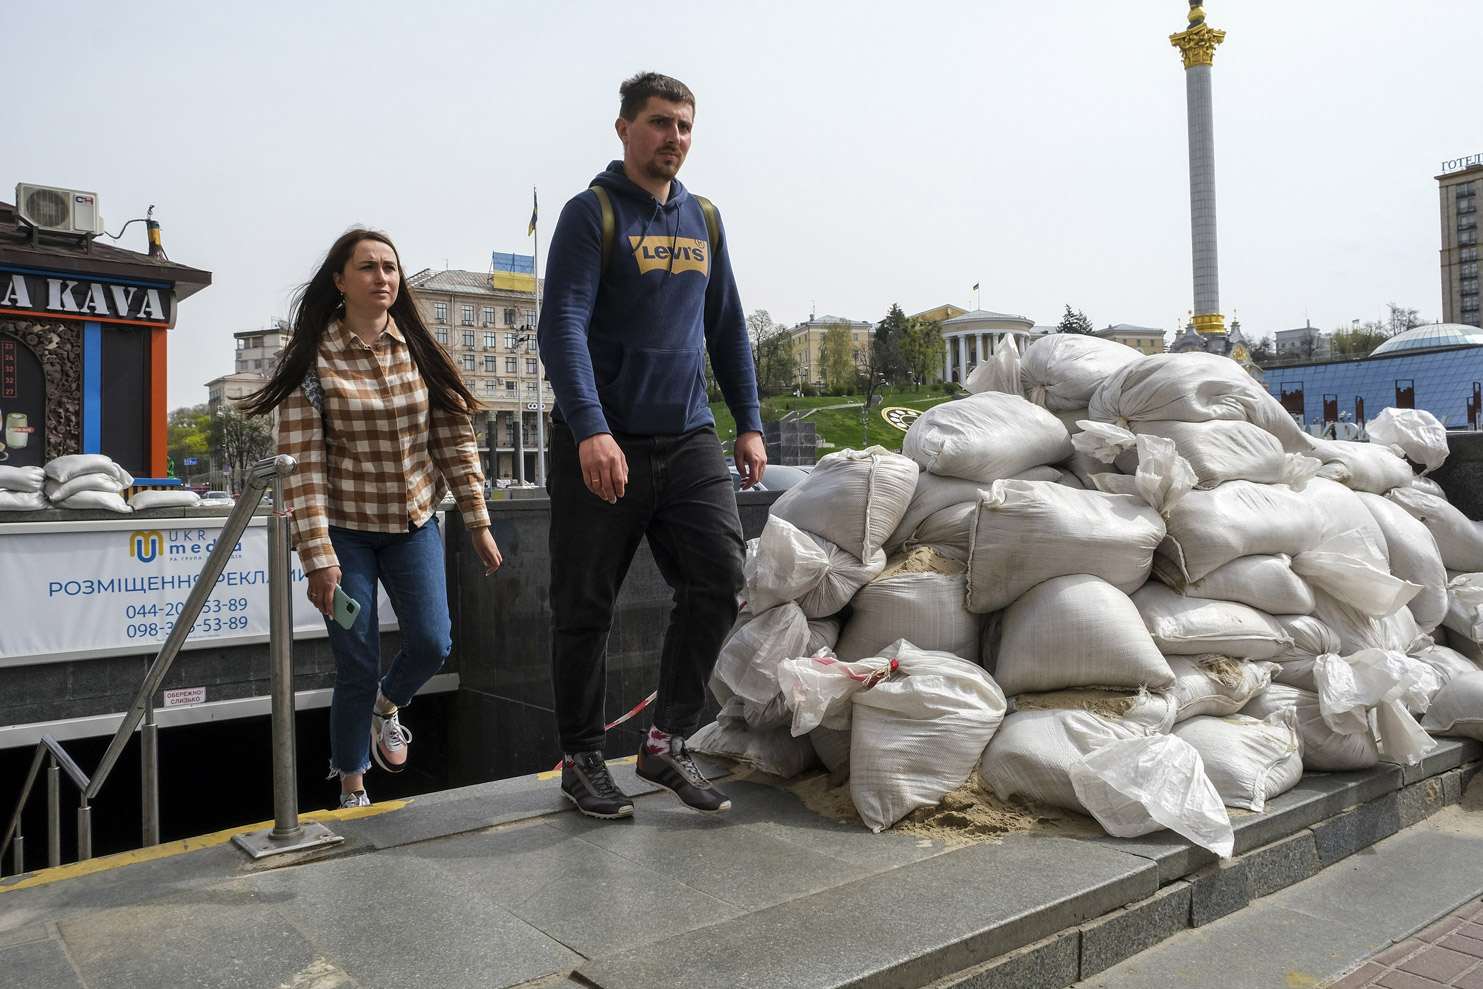 Kyiv residents walk around the city on Monday.